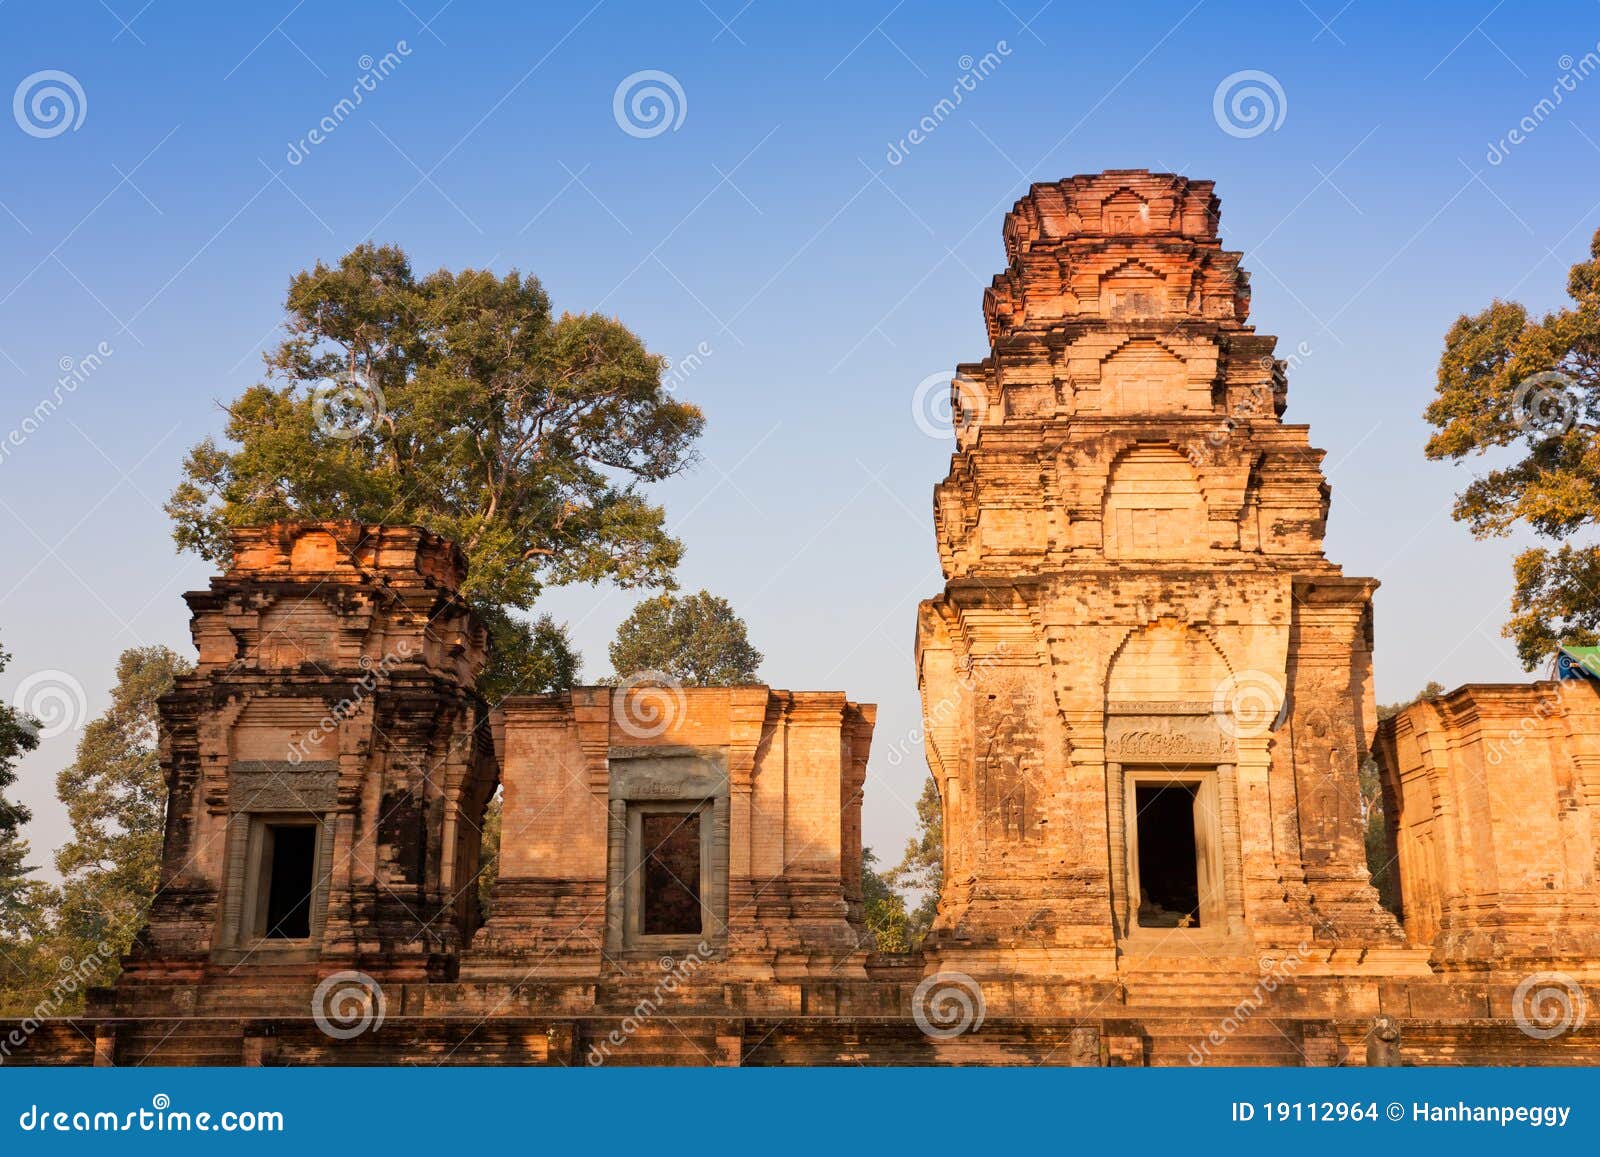 prasat kravan temple, angkor thom, cambodia